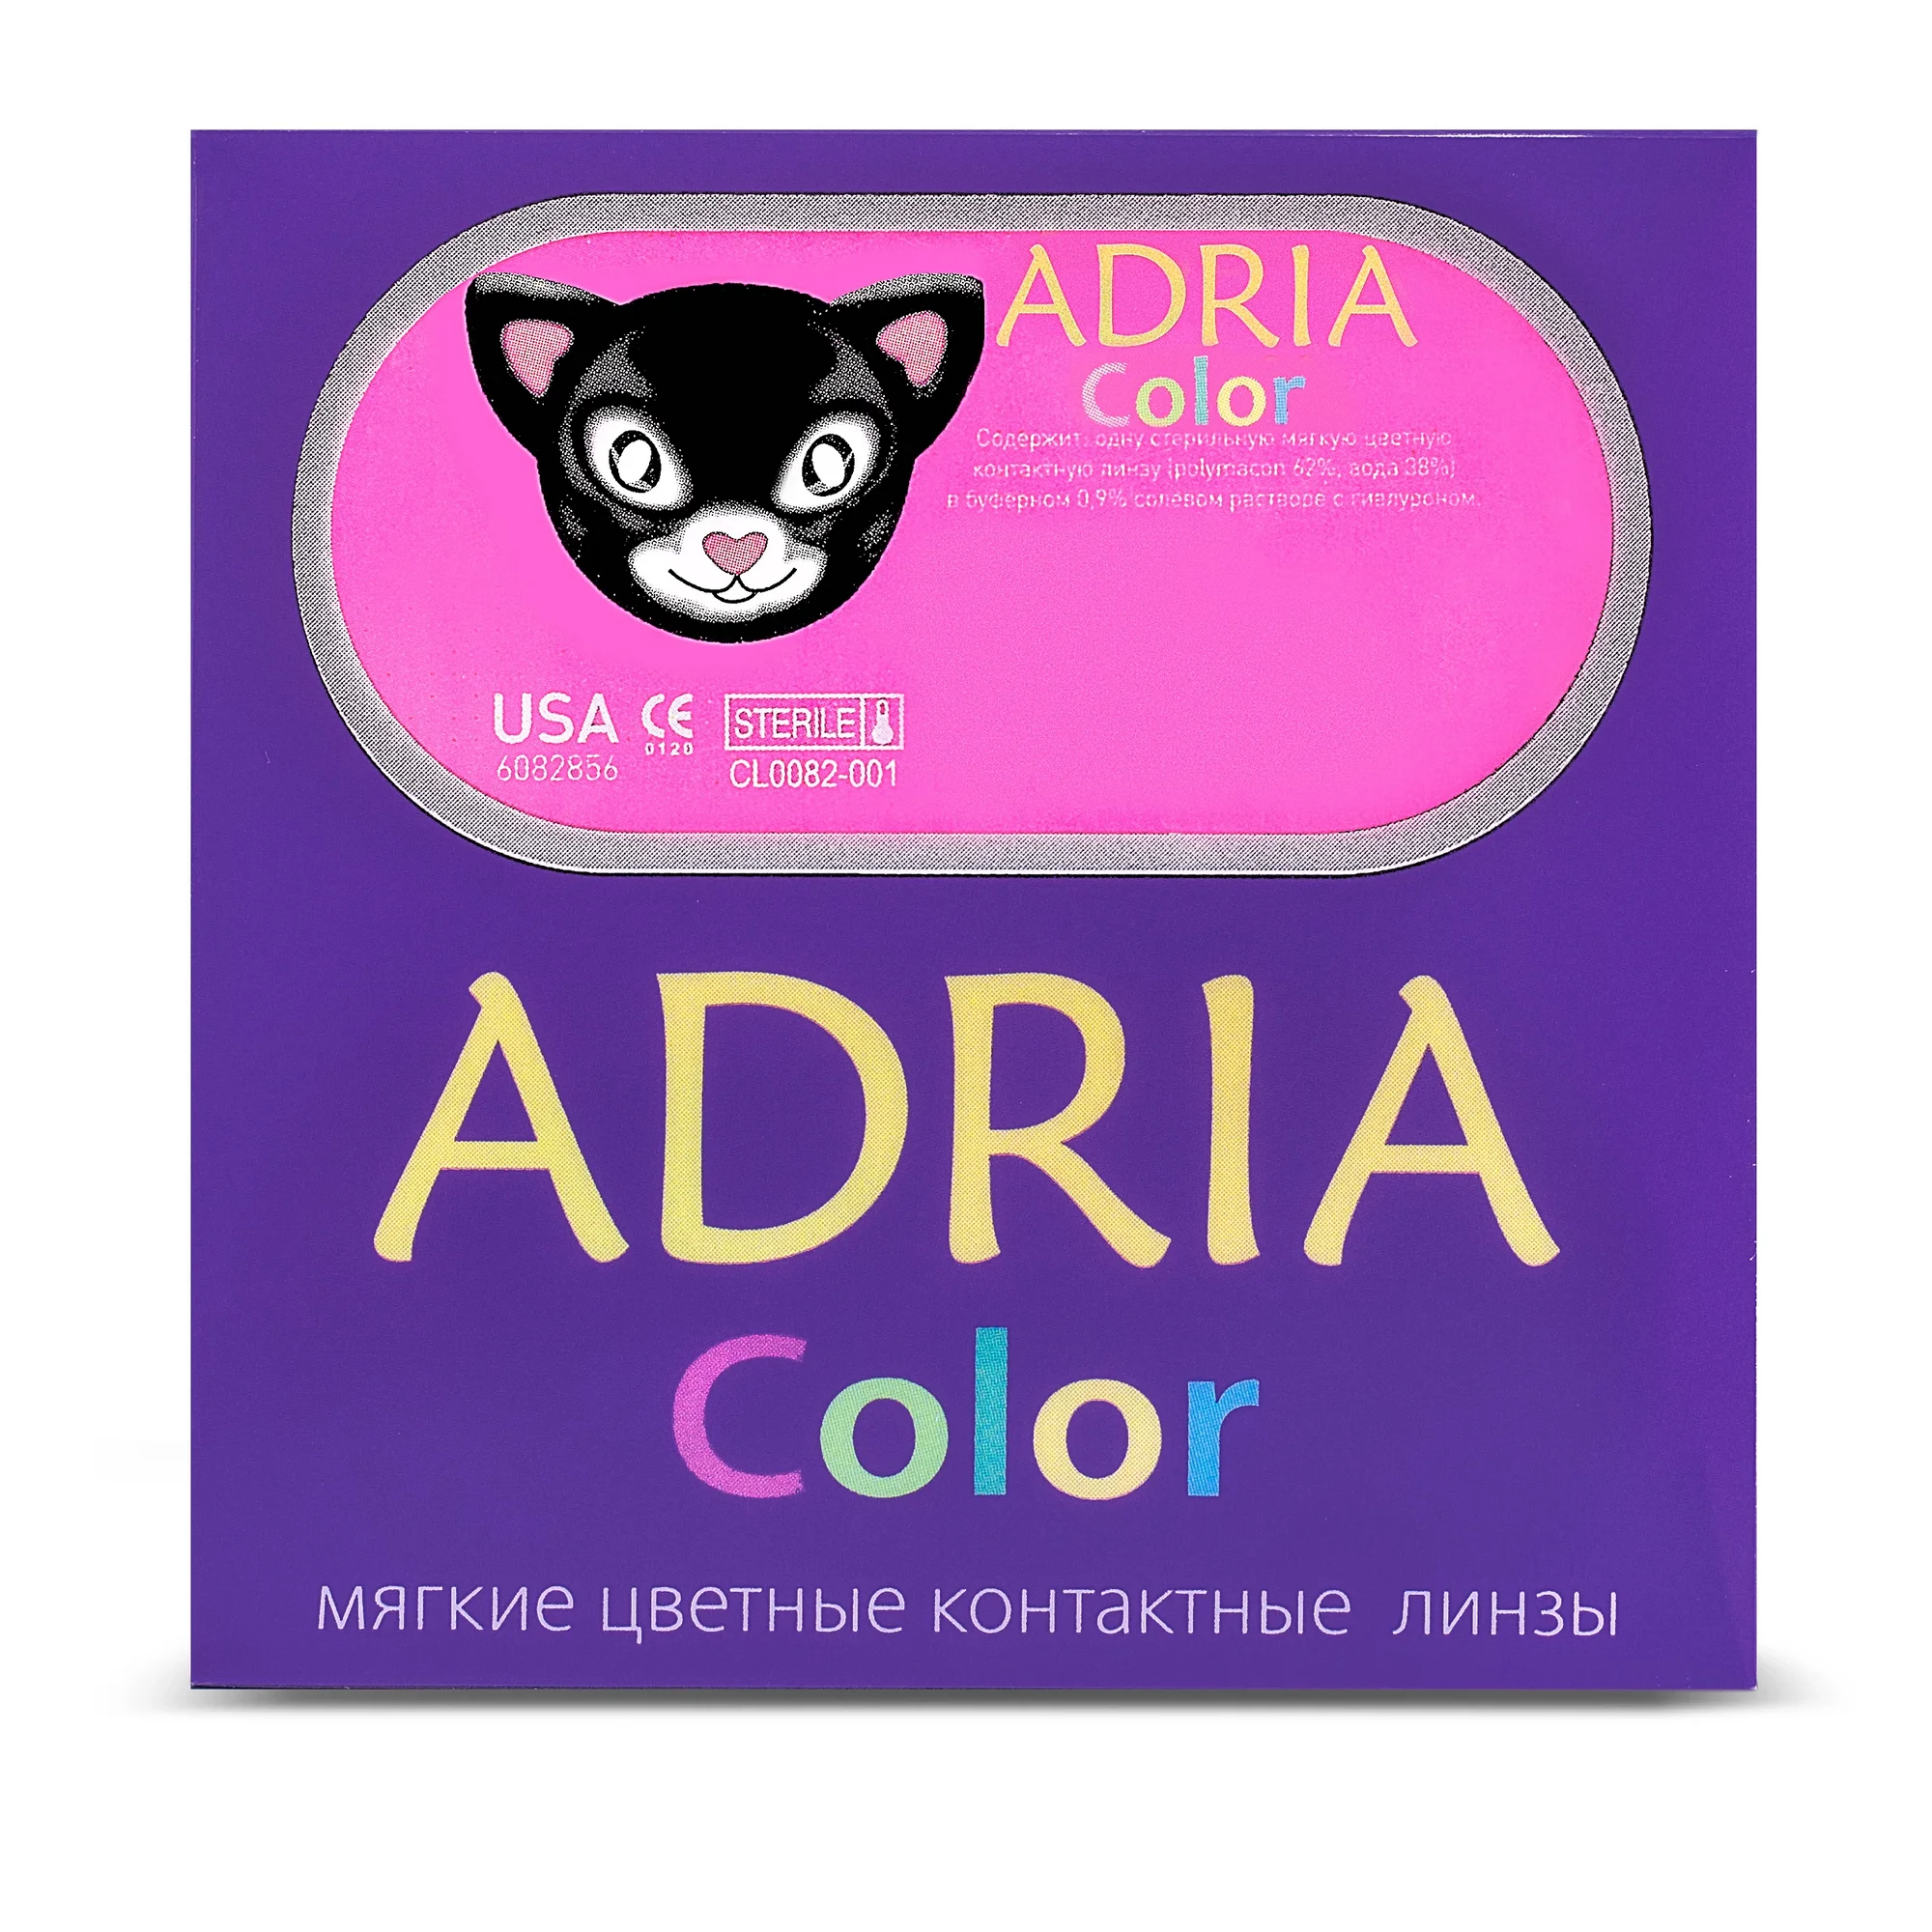 COLOR BOX ADRIA Color 3 Tone Gray (серый)